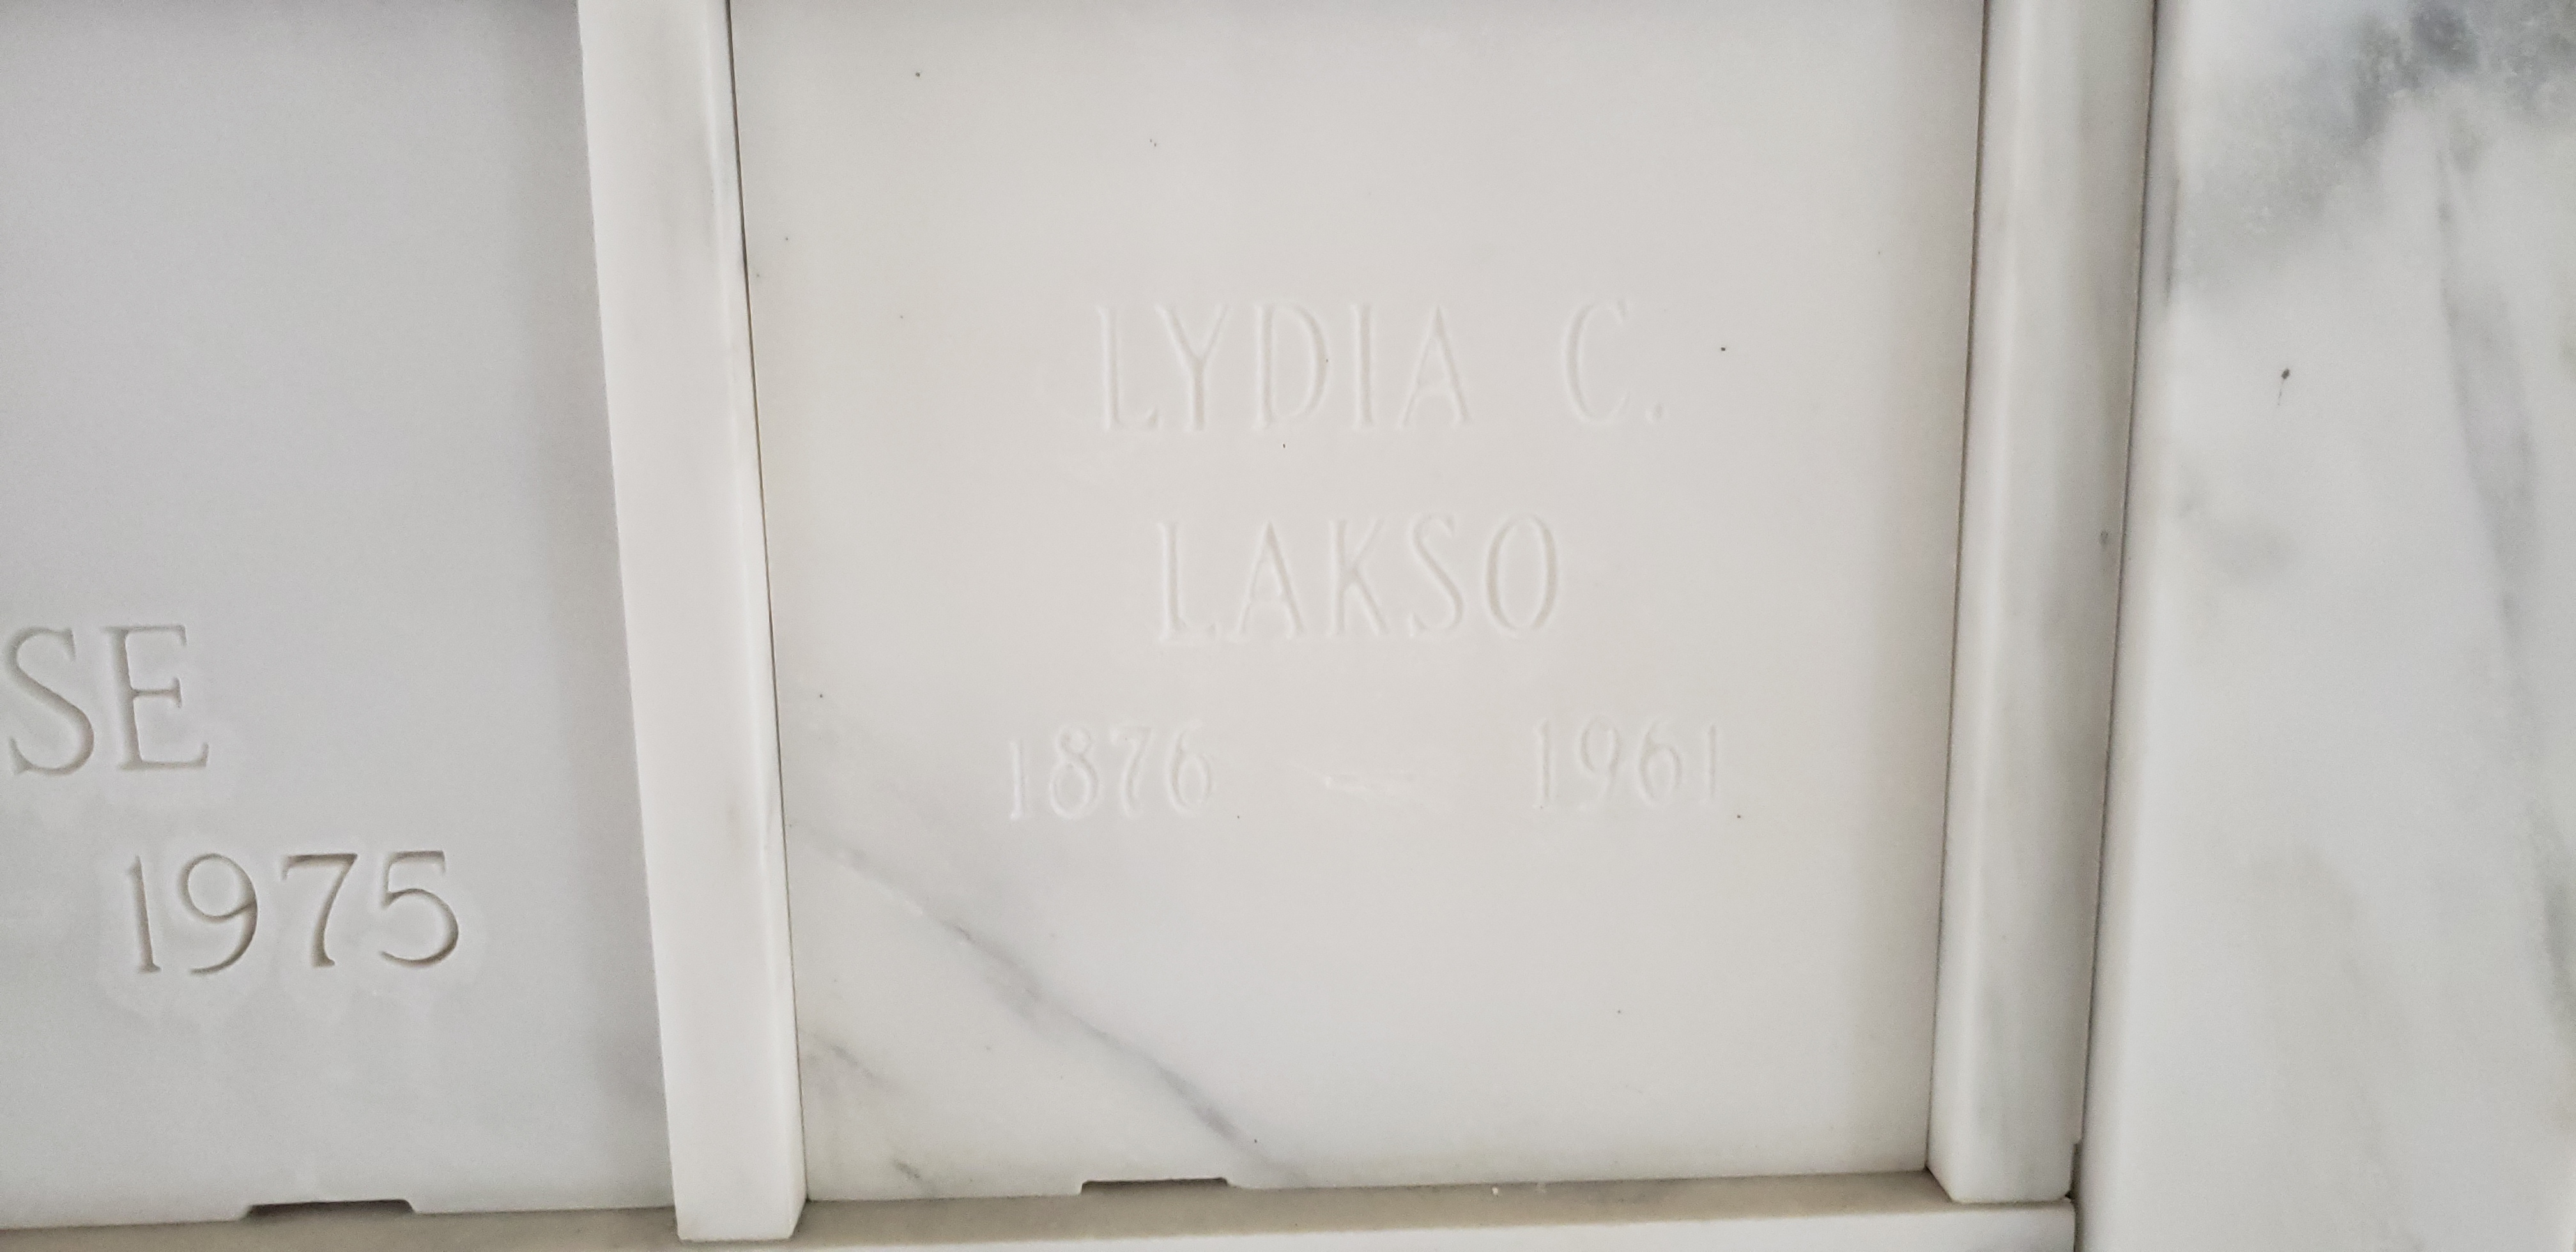 Lydia C Lakso